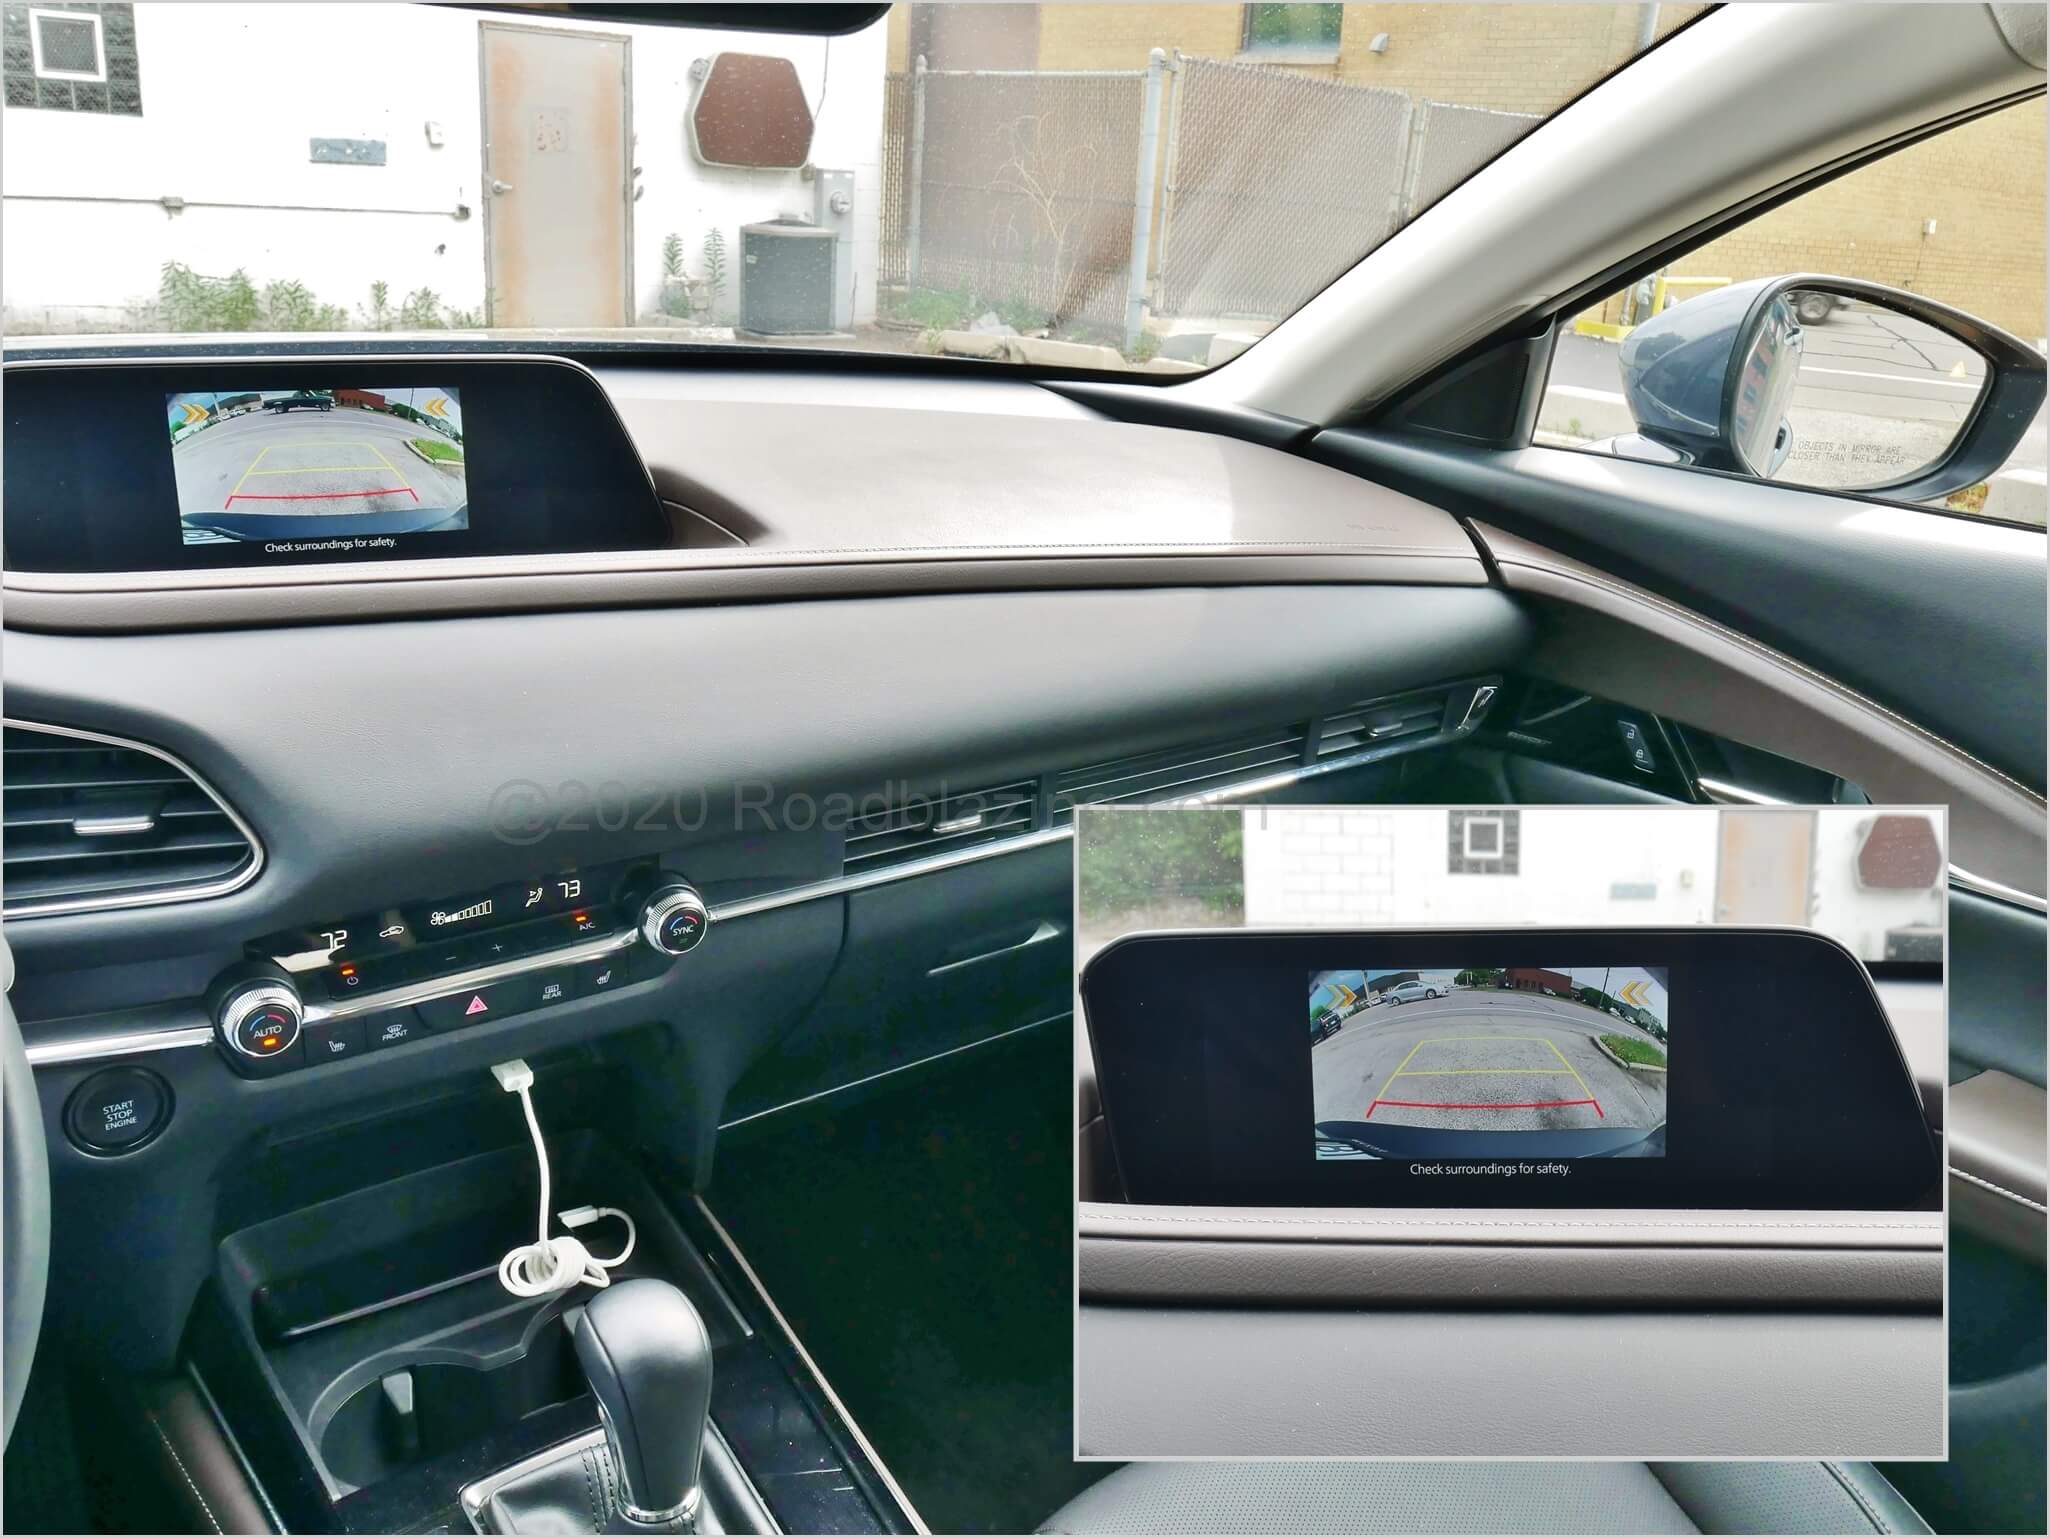 2020 Mazda CX-30 Premium AWD: Side mirror blind spot warning + media display rear cross traffic warning